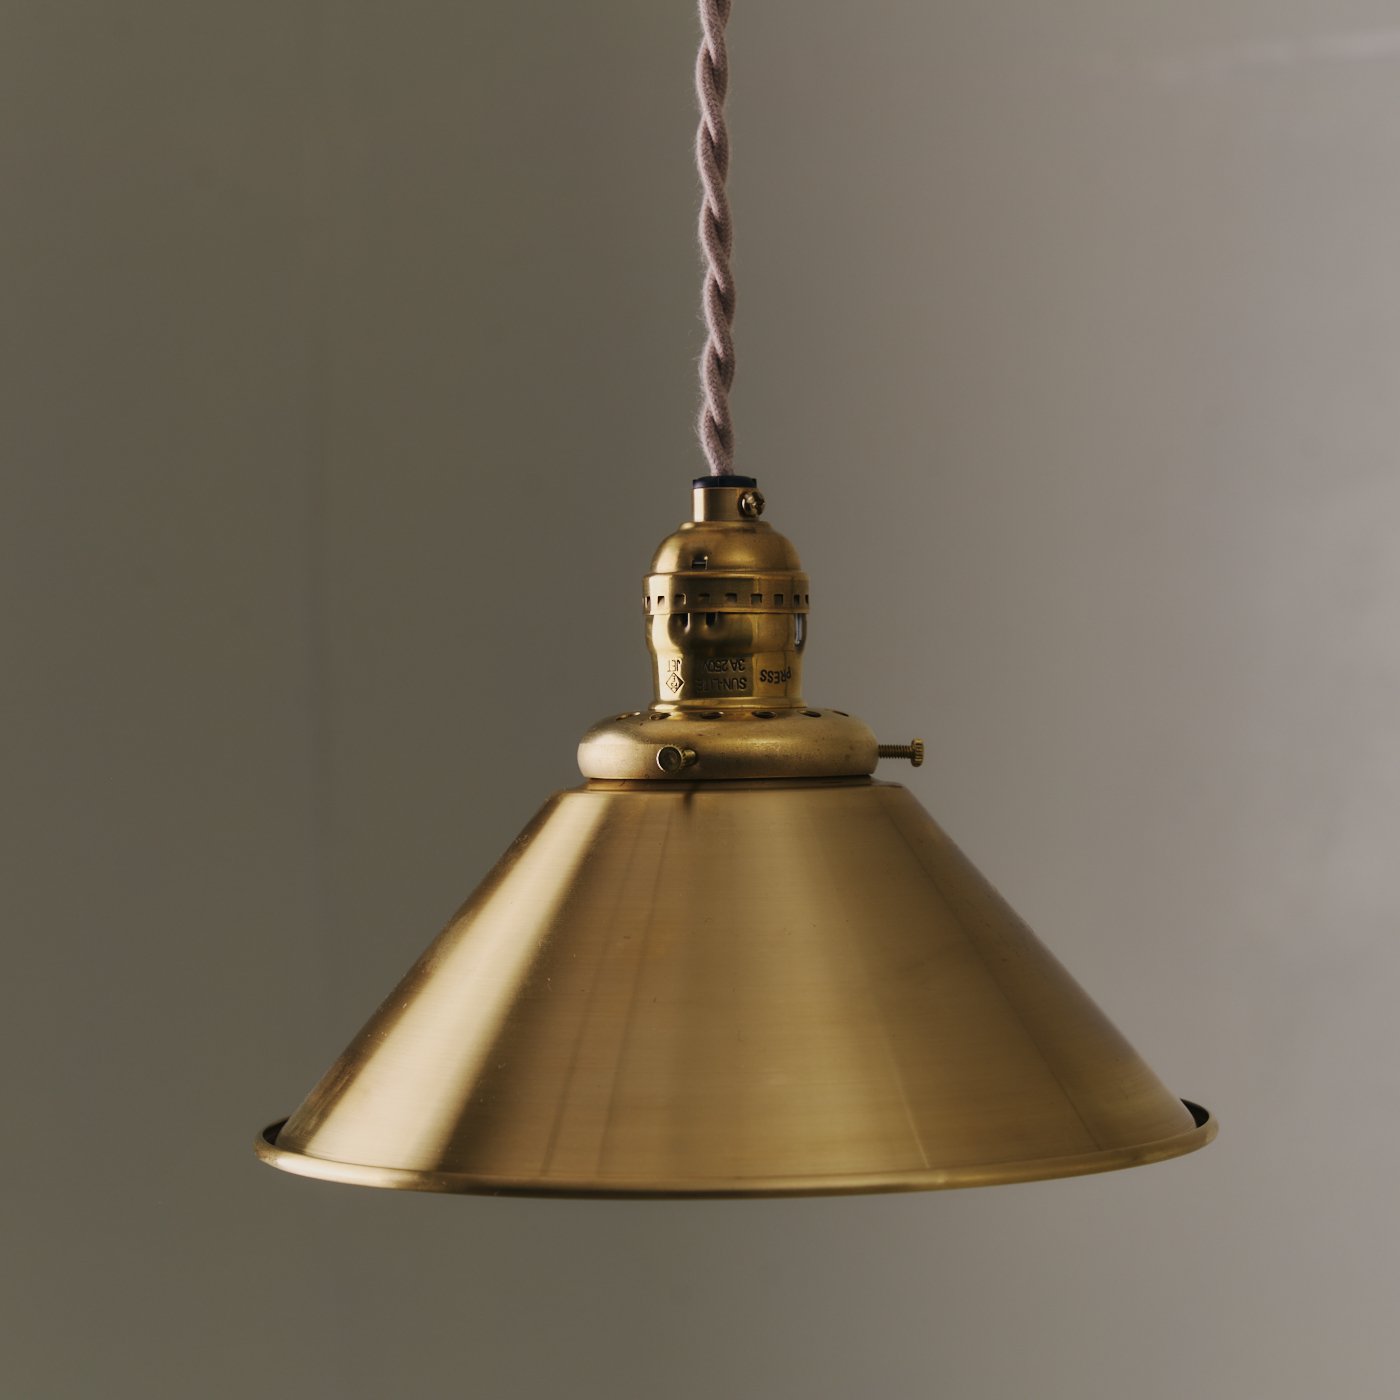 OPL070C METAL PENDANT LAMP - POINT NO.39｜東京｜目黒｜真鍮照明｜ヴィンテージ家具